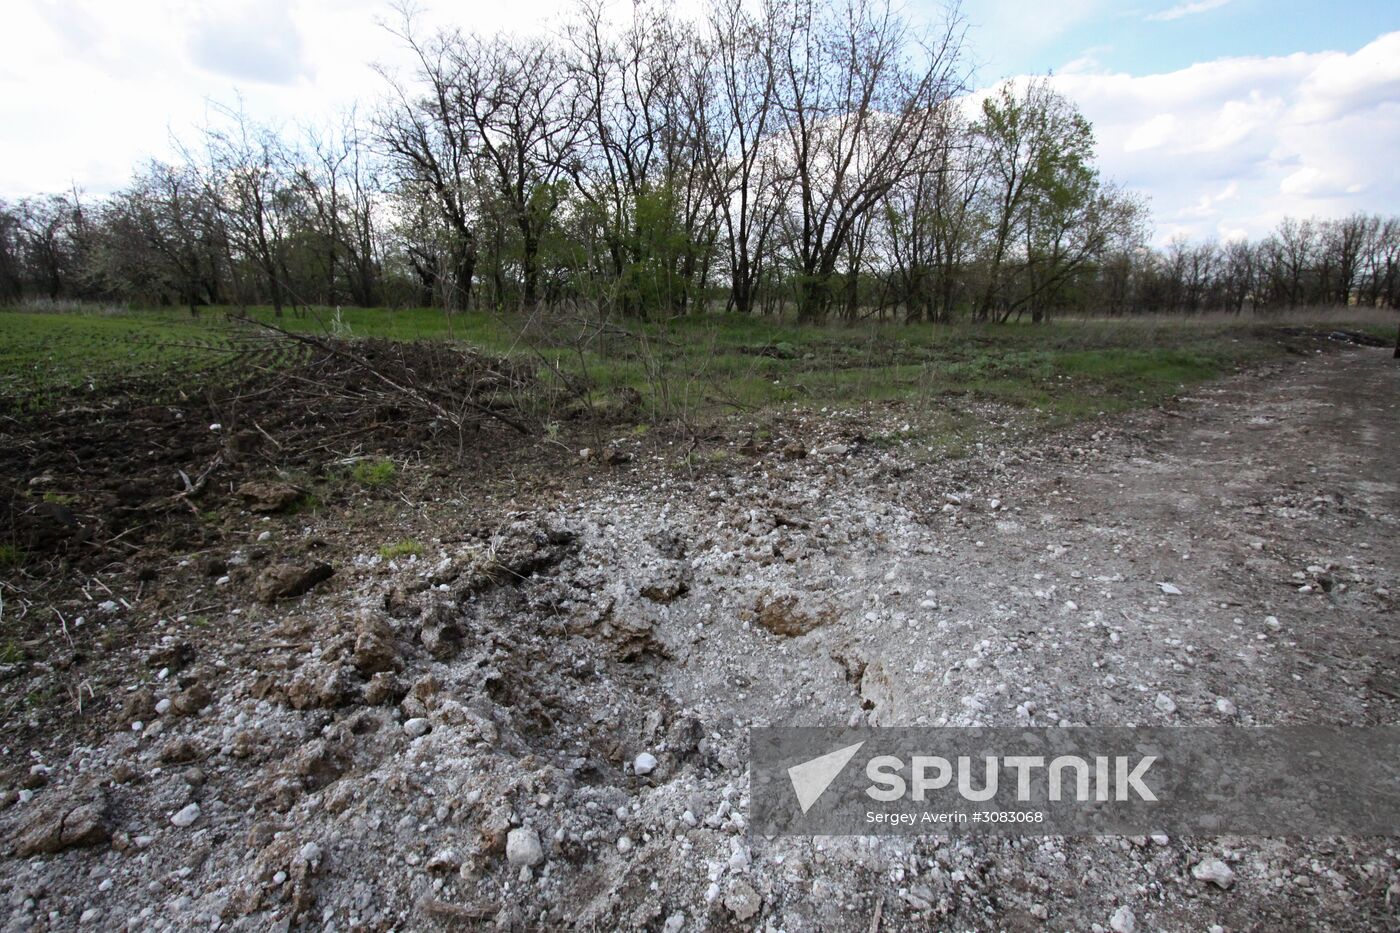 OSCE representatives in Ukraine on site of explosion of OSCE car in Lugansk Region